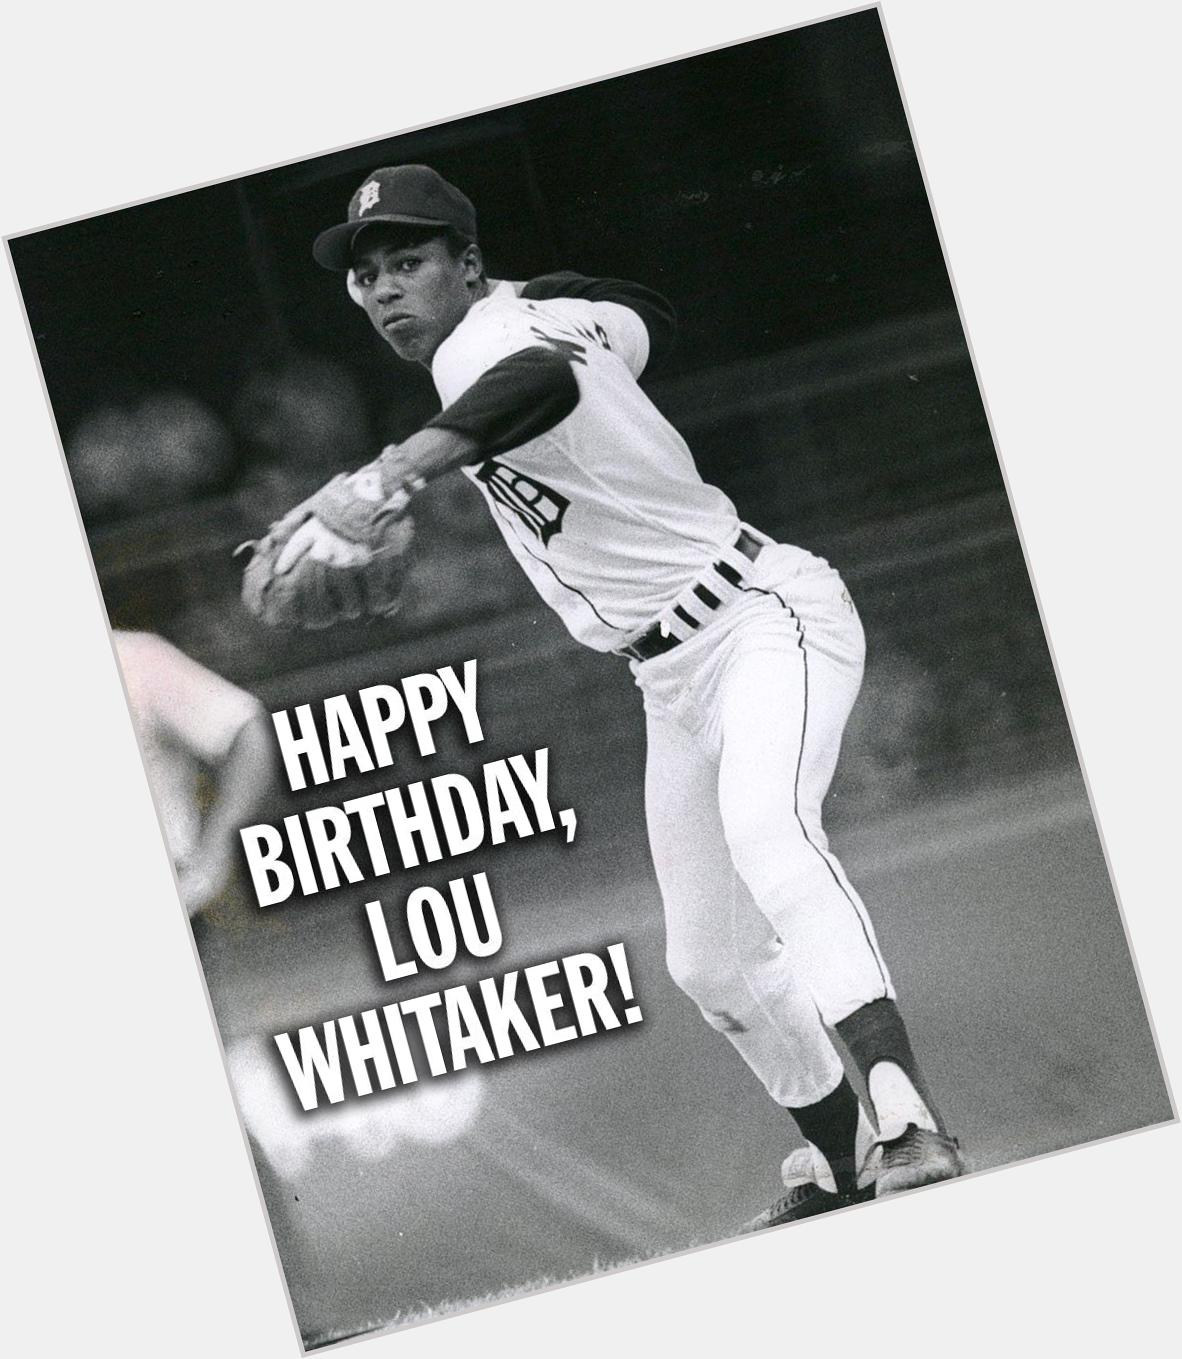 Happy birthday to great Lou Whitaker! 